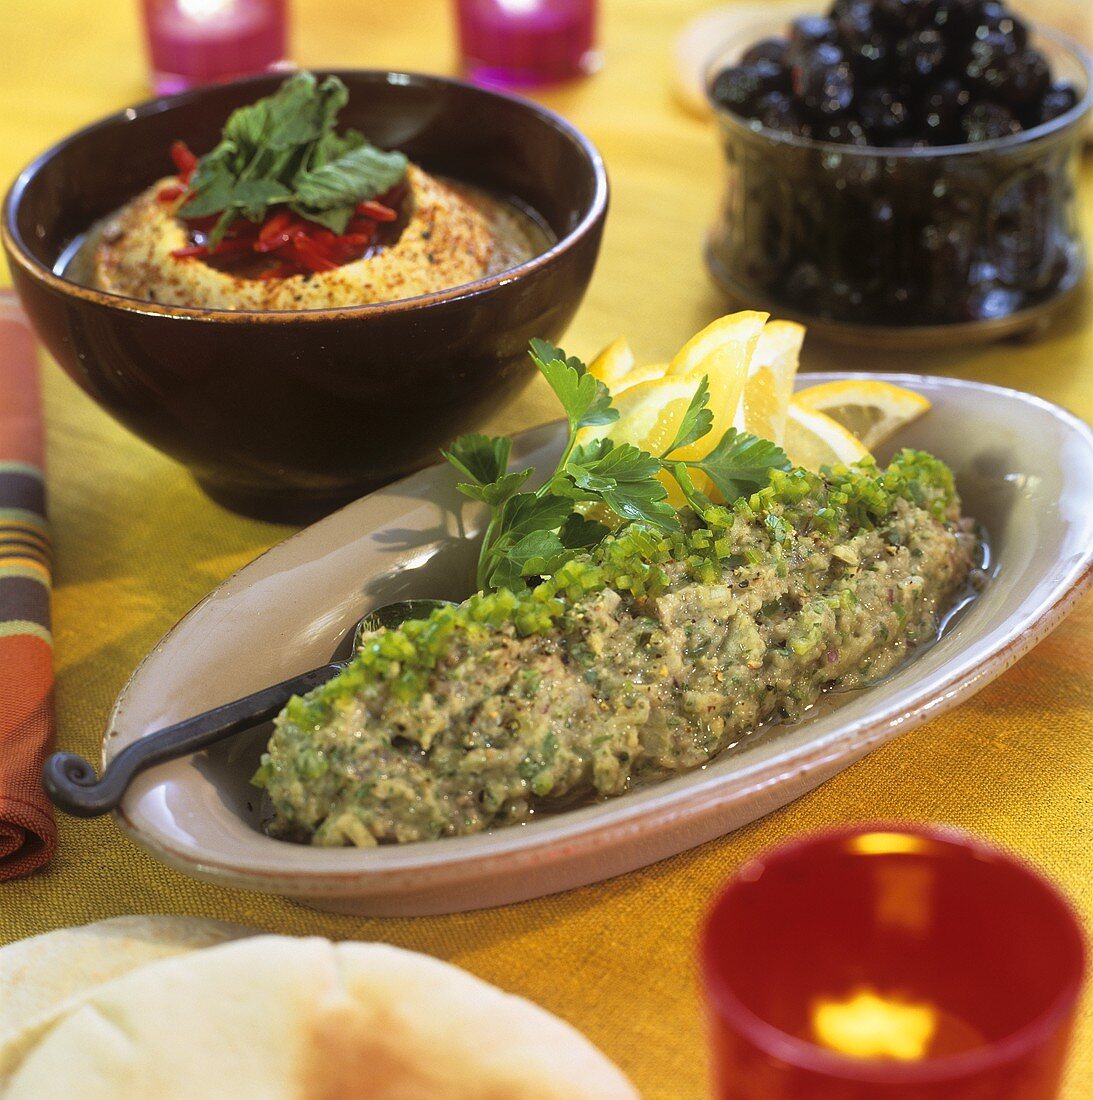 Lebanese appetisers: baba ganoush and hummus